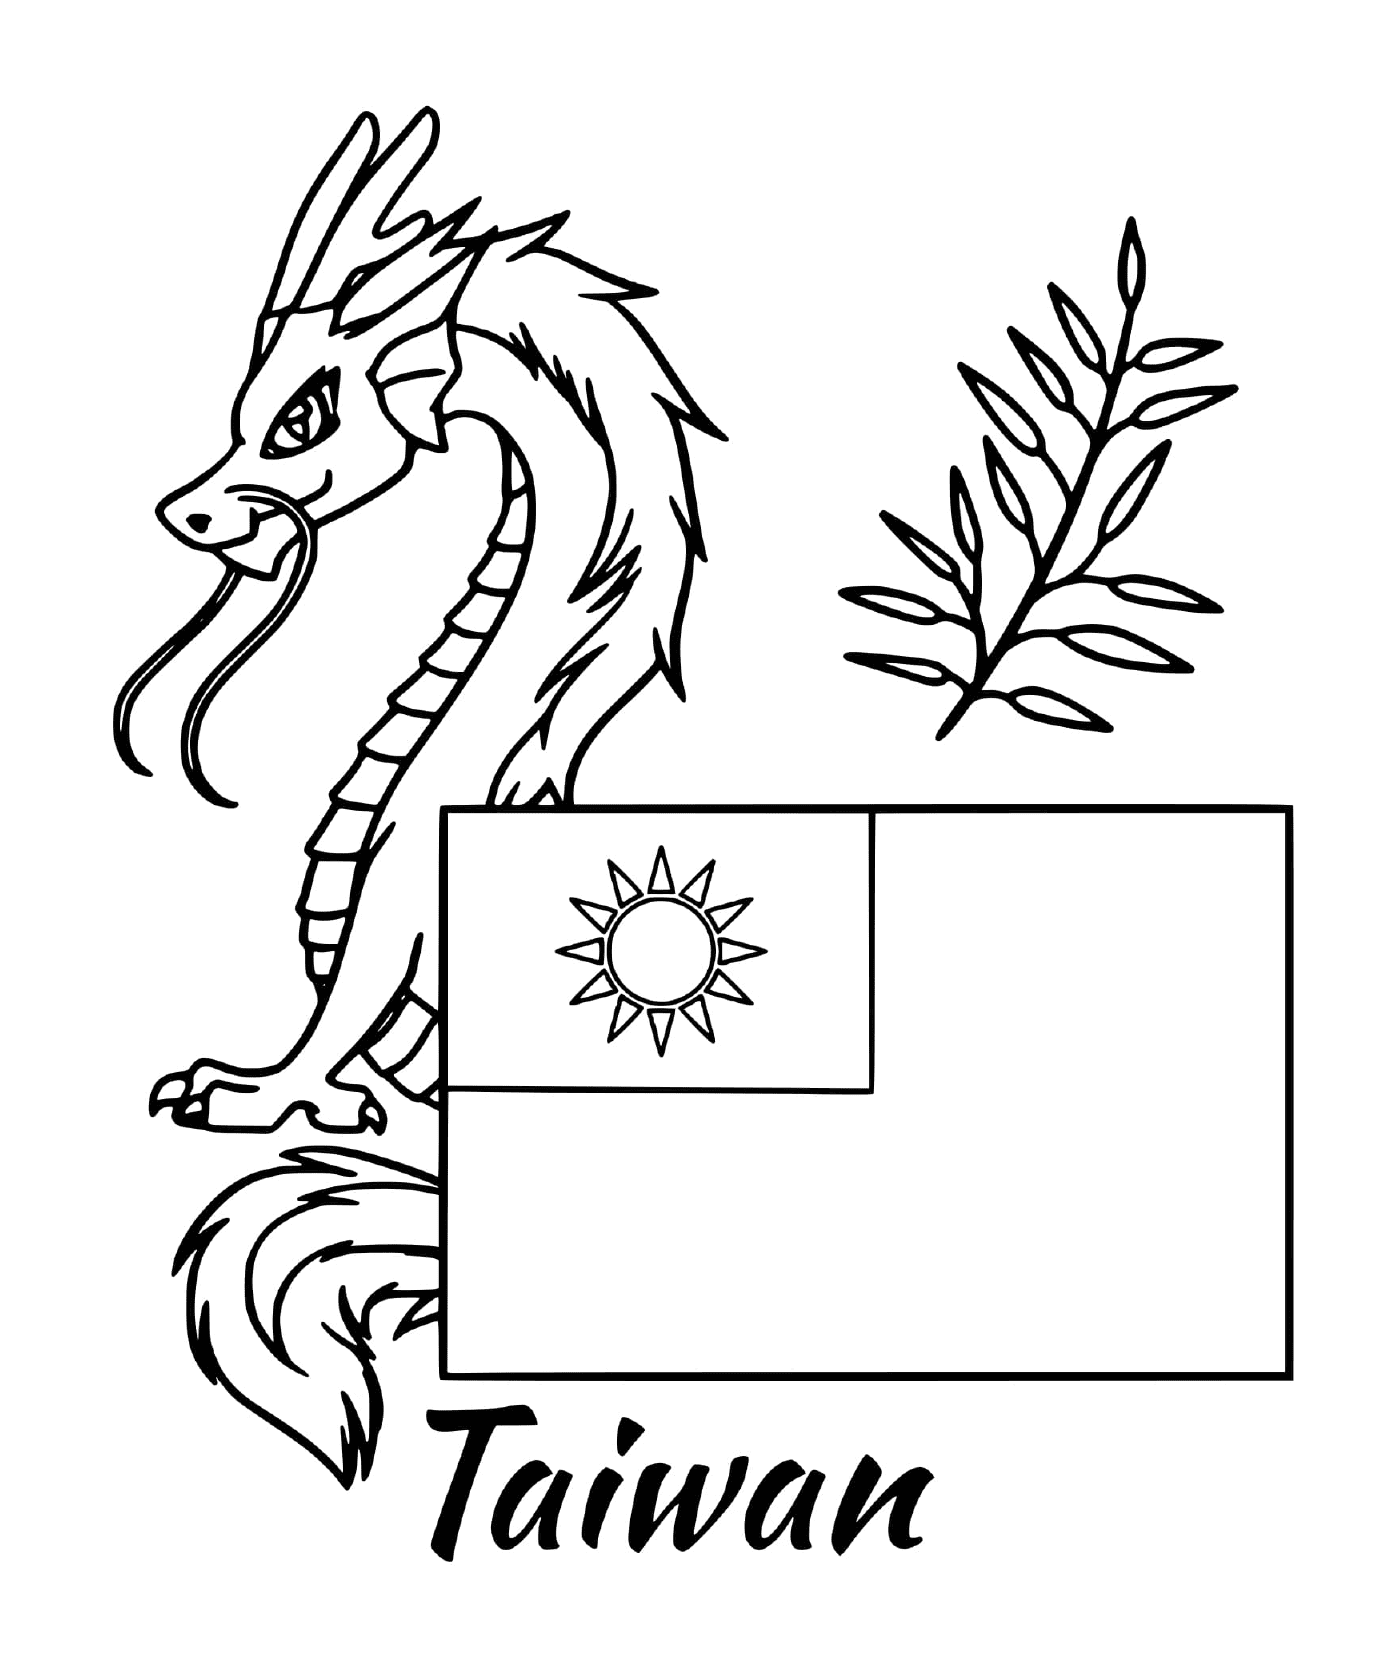  Taiwan flag with a dragon 